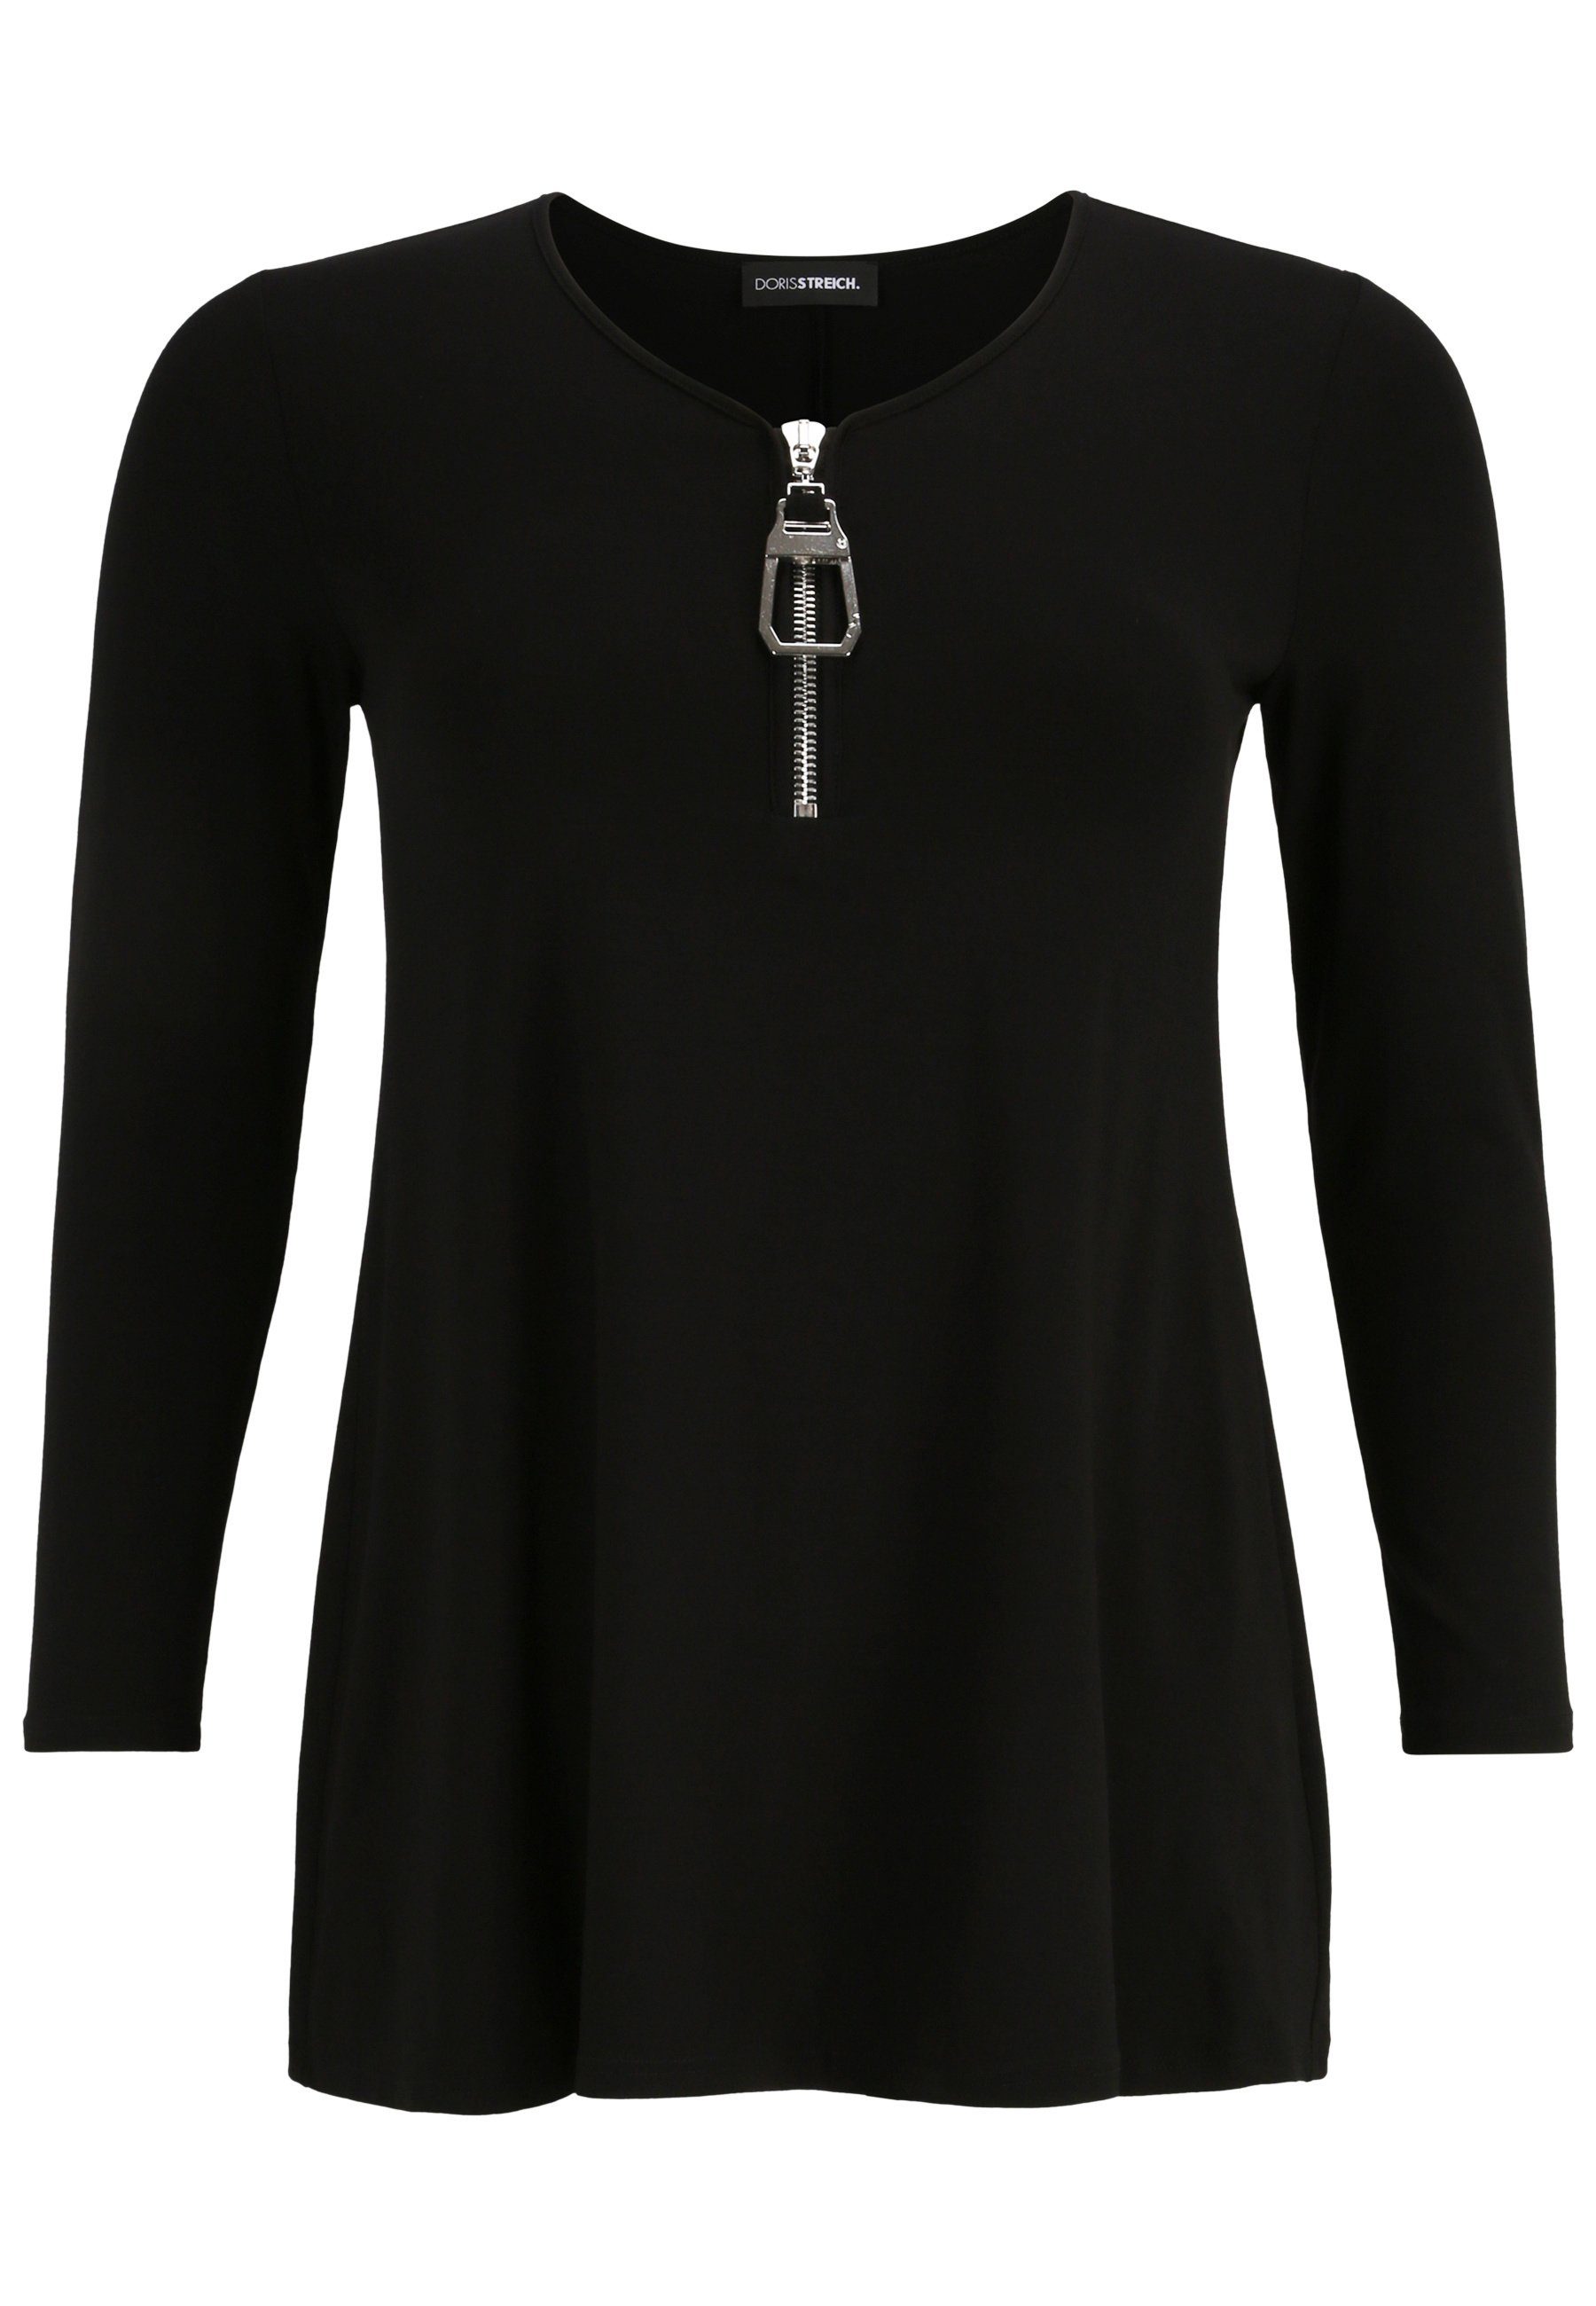 Doris Streich Shirtbluse Long-Shirt mit dekorativem Reißverschluss